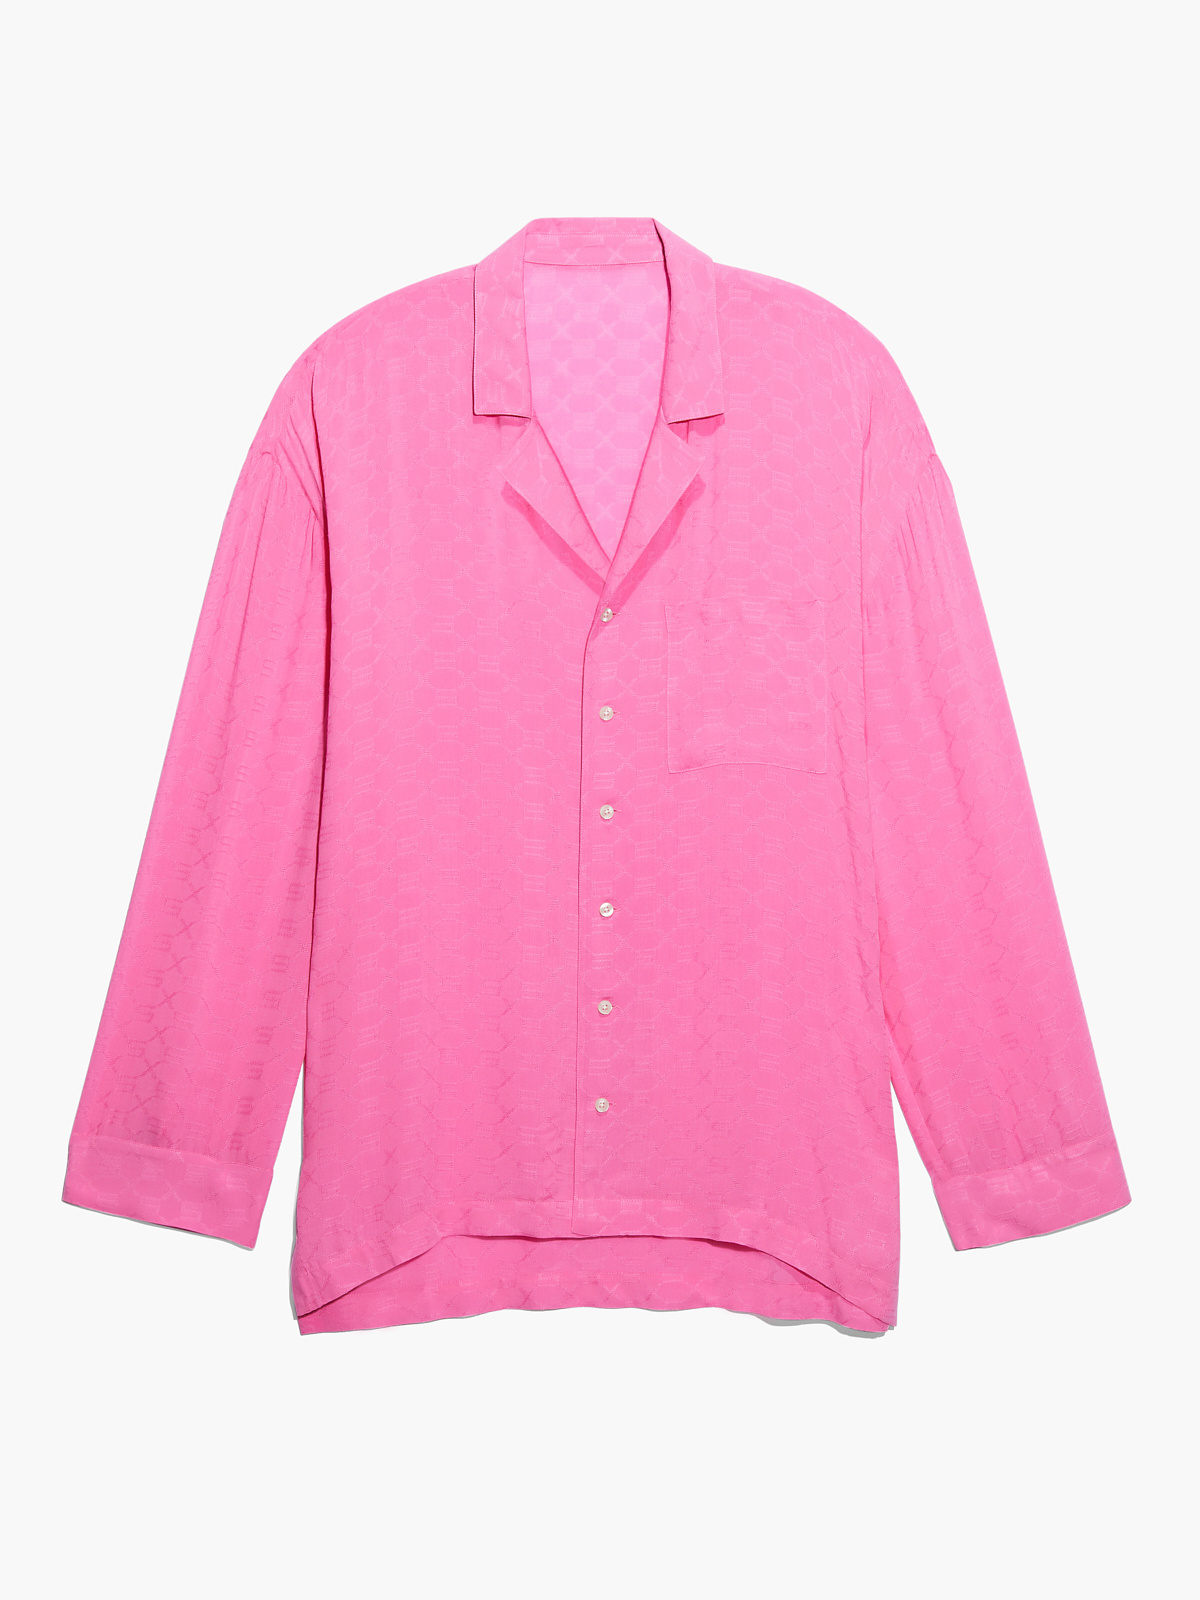 Monogram Voile Sleep Shirt in Pink